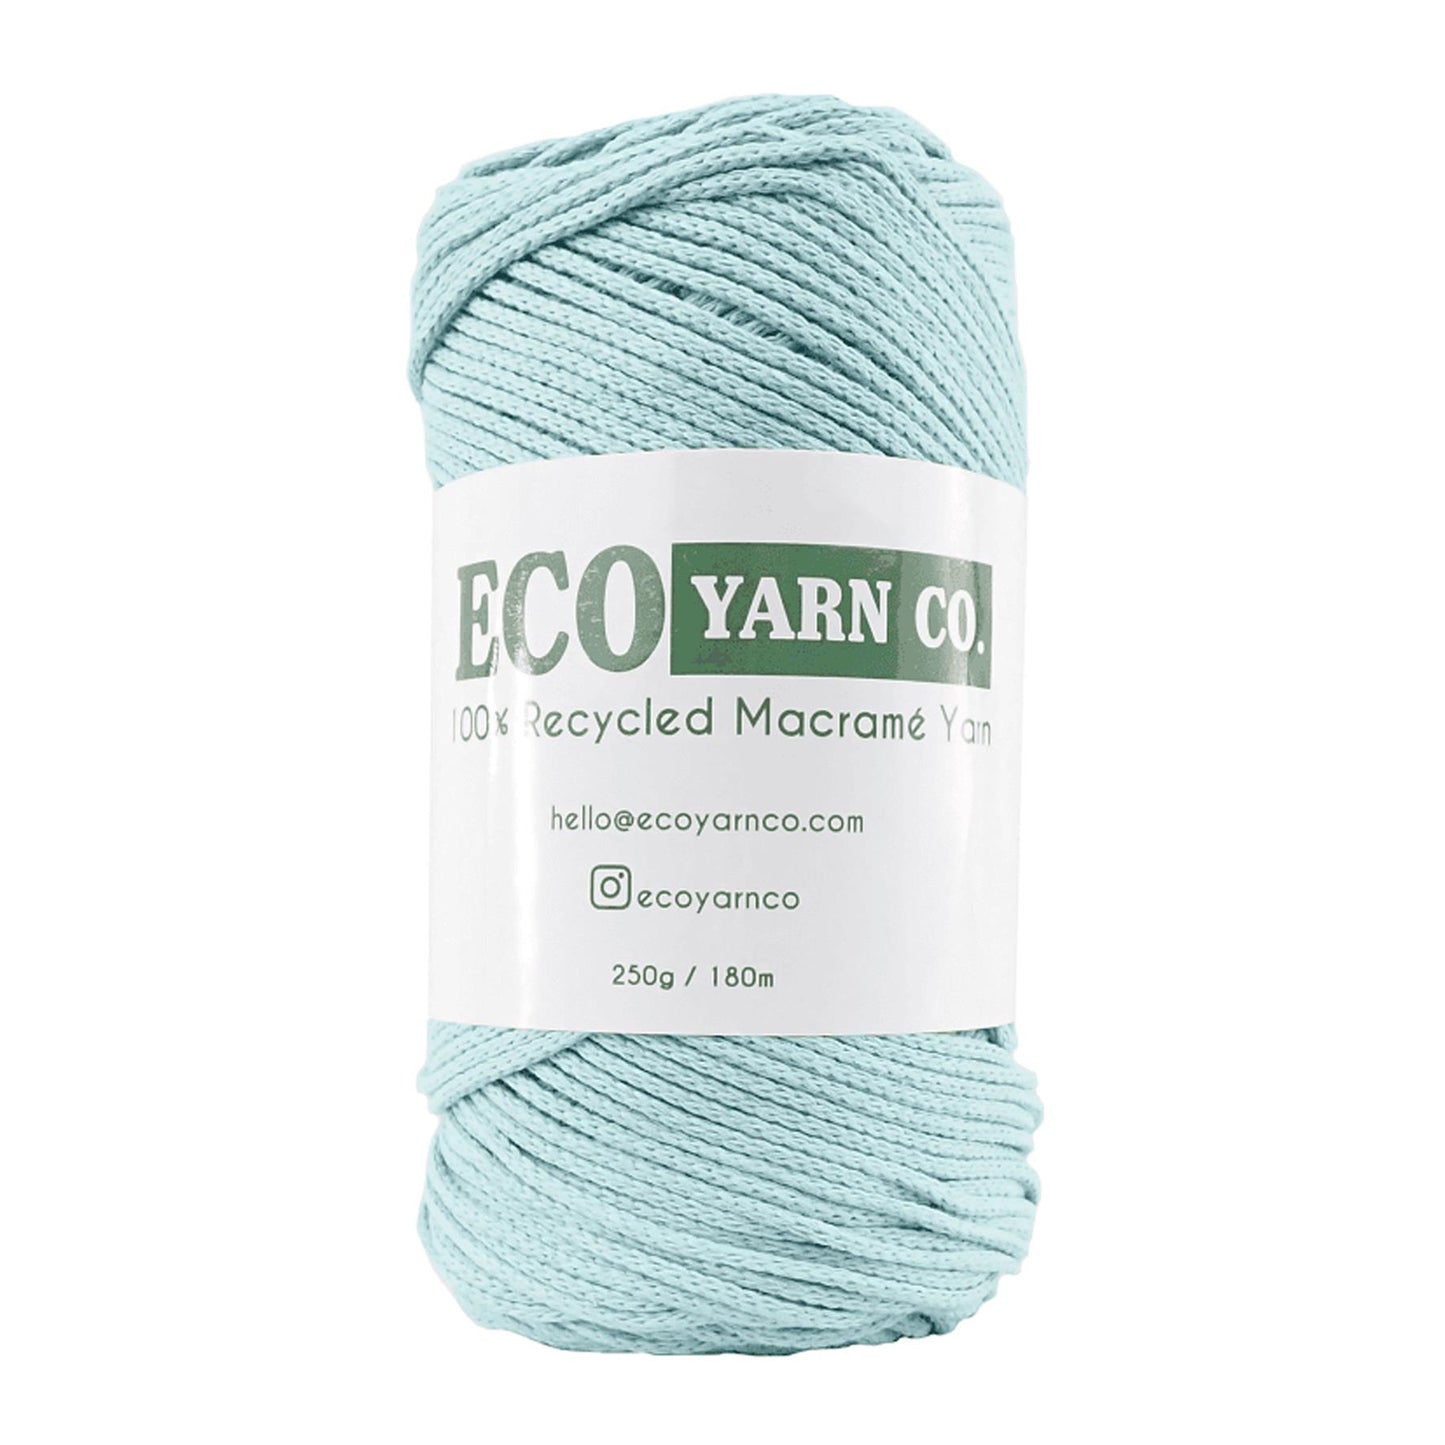 [Eco Yarn Co] Light Green Cotton/Polyester Macrame Yarn - 180M, 250g